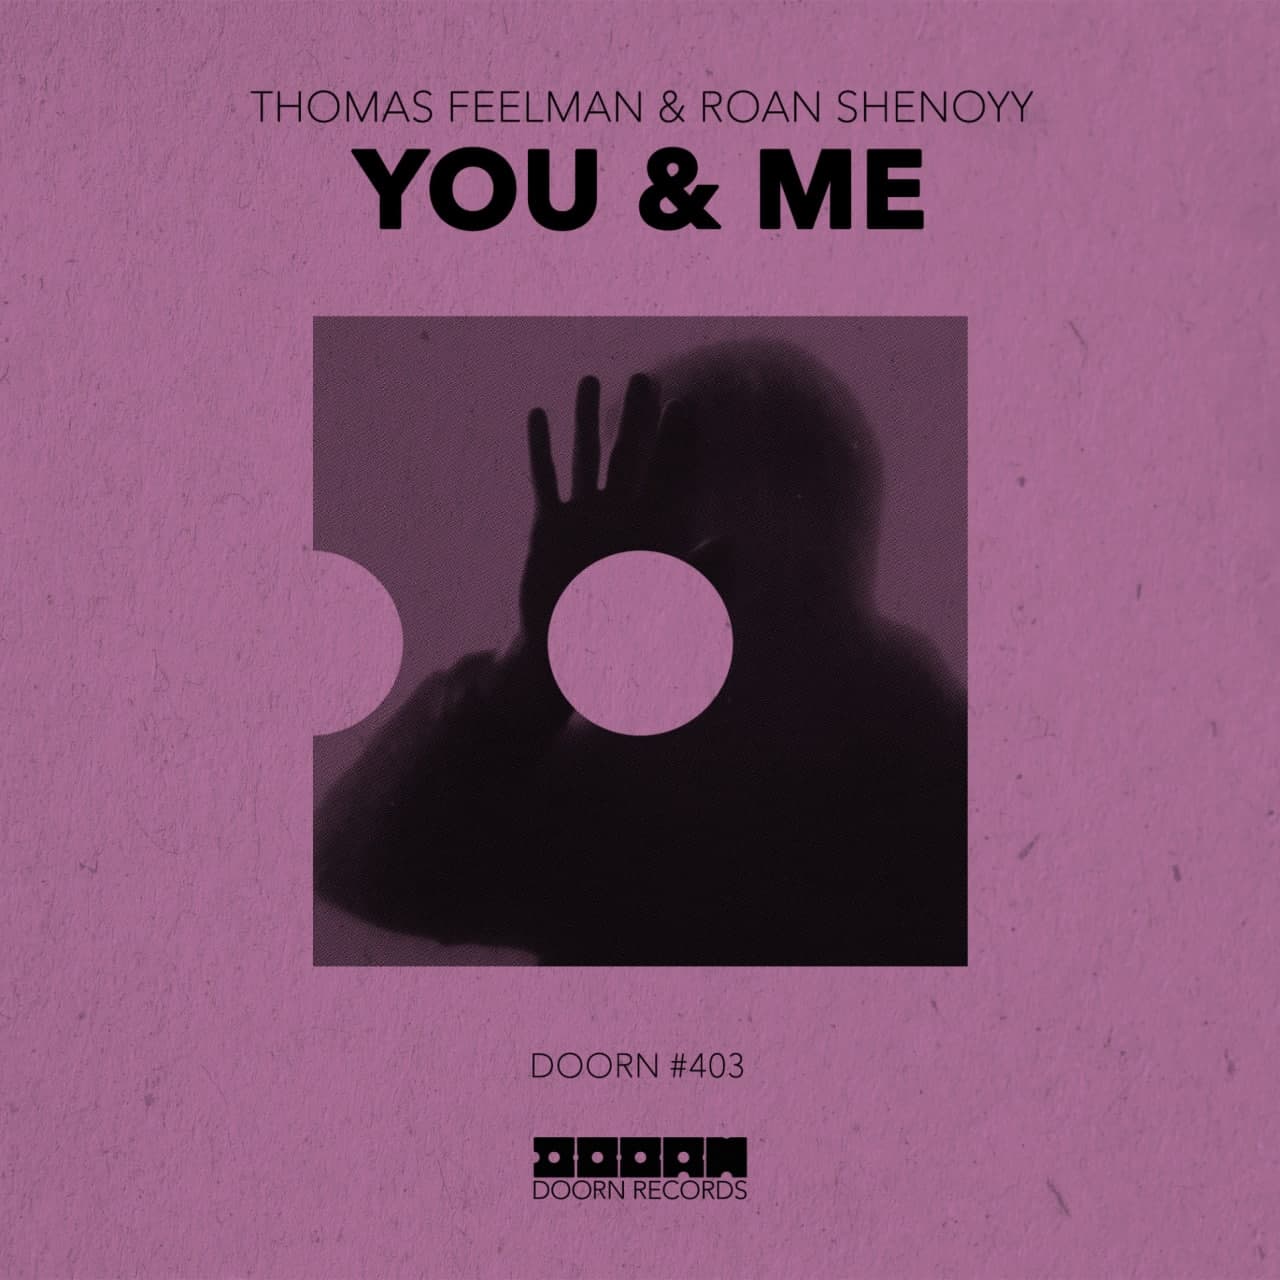 Thomas Feelman & Roan Shenoyy - You & Me (Extended Mix)